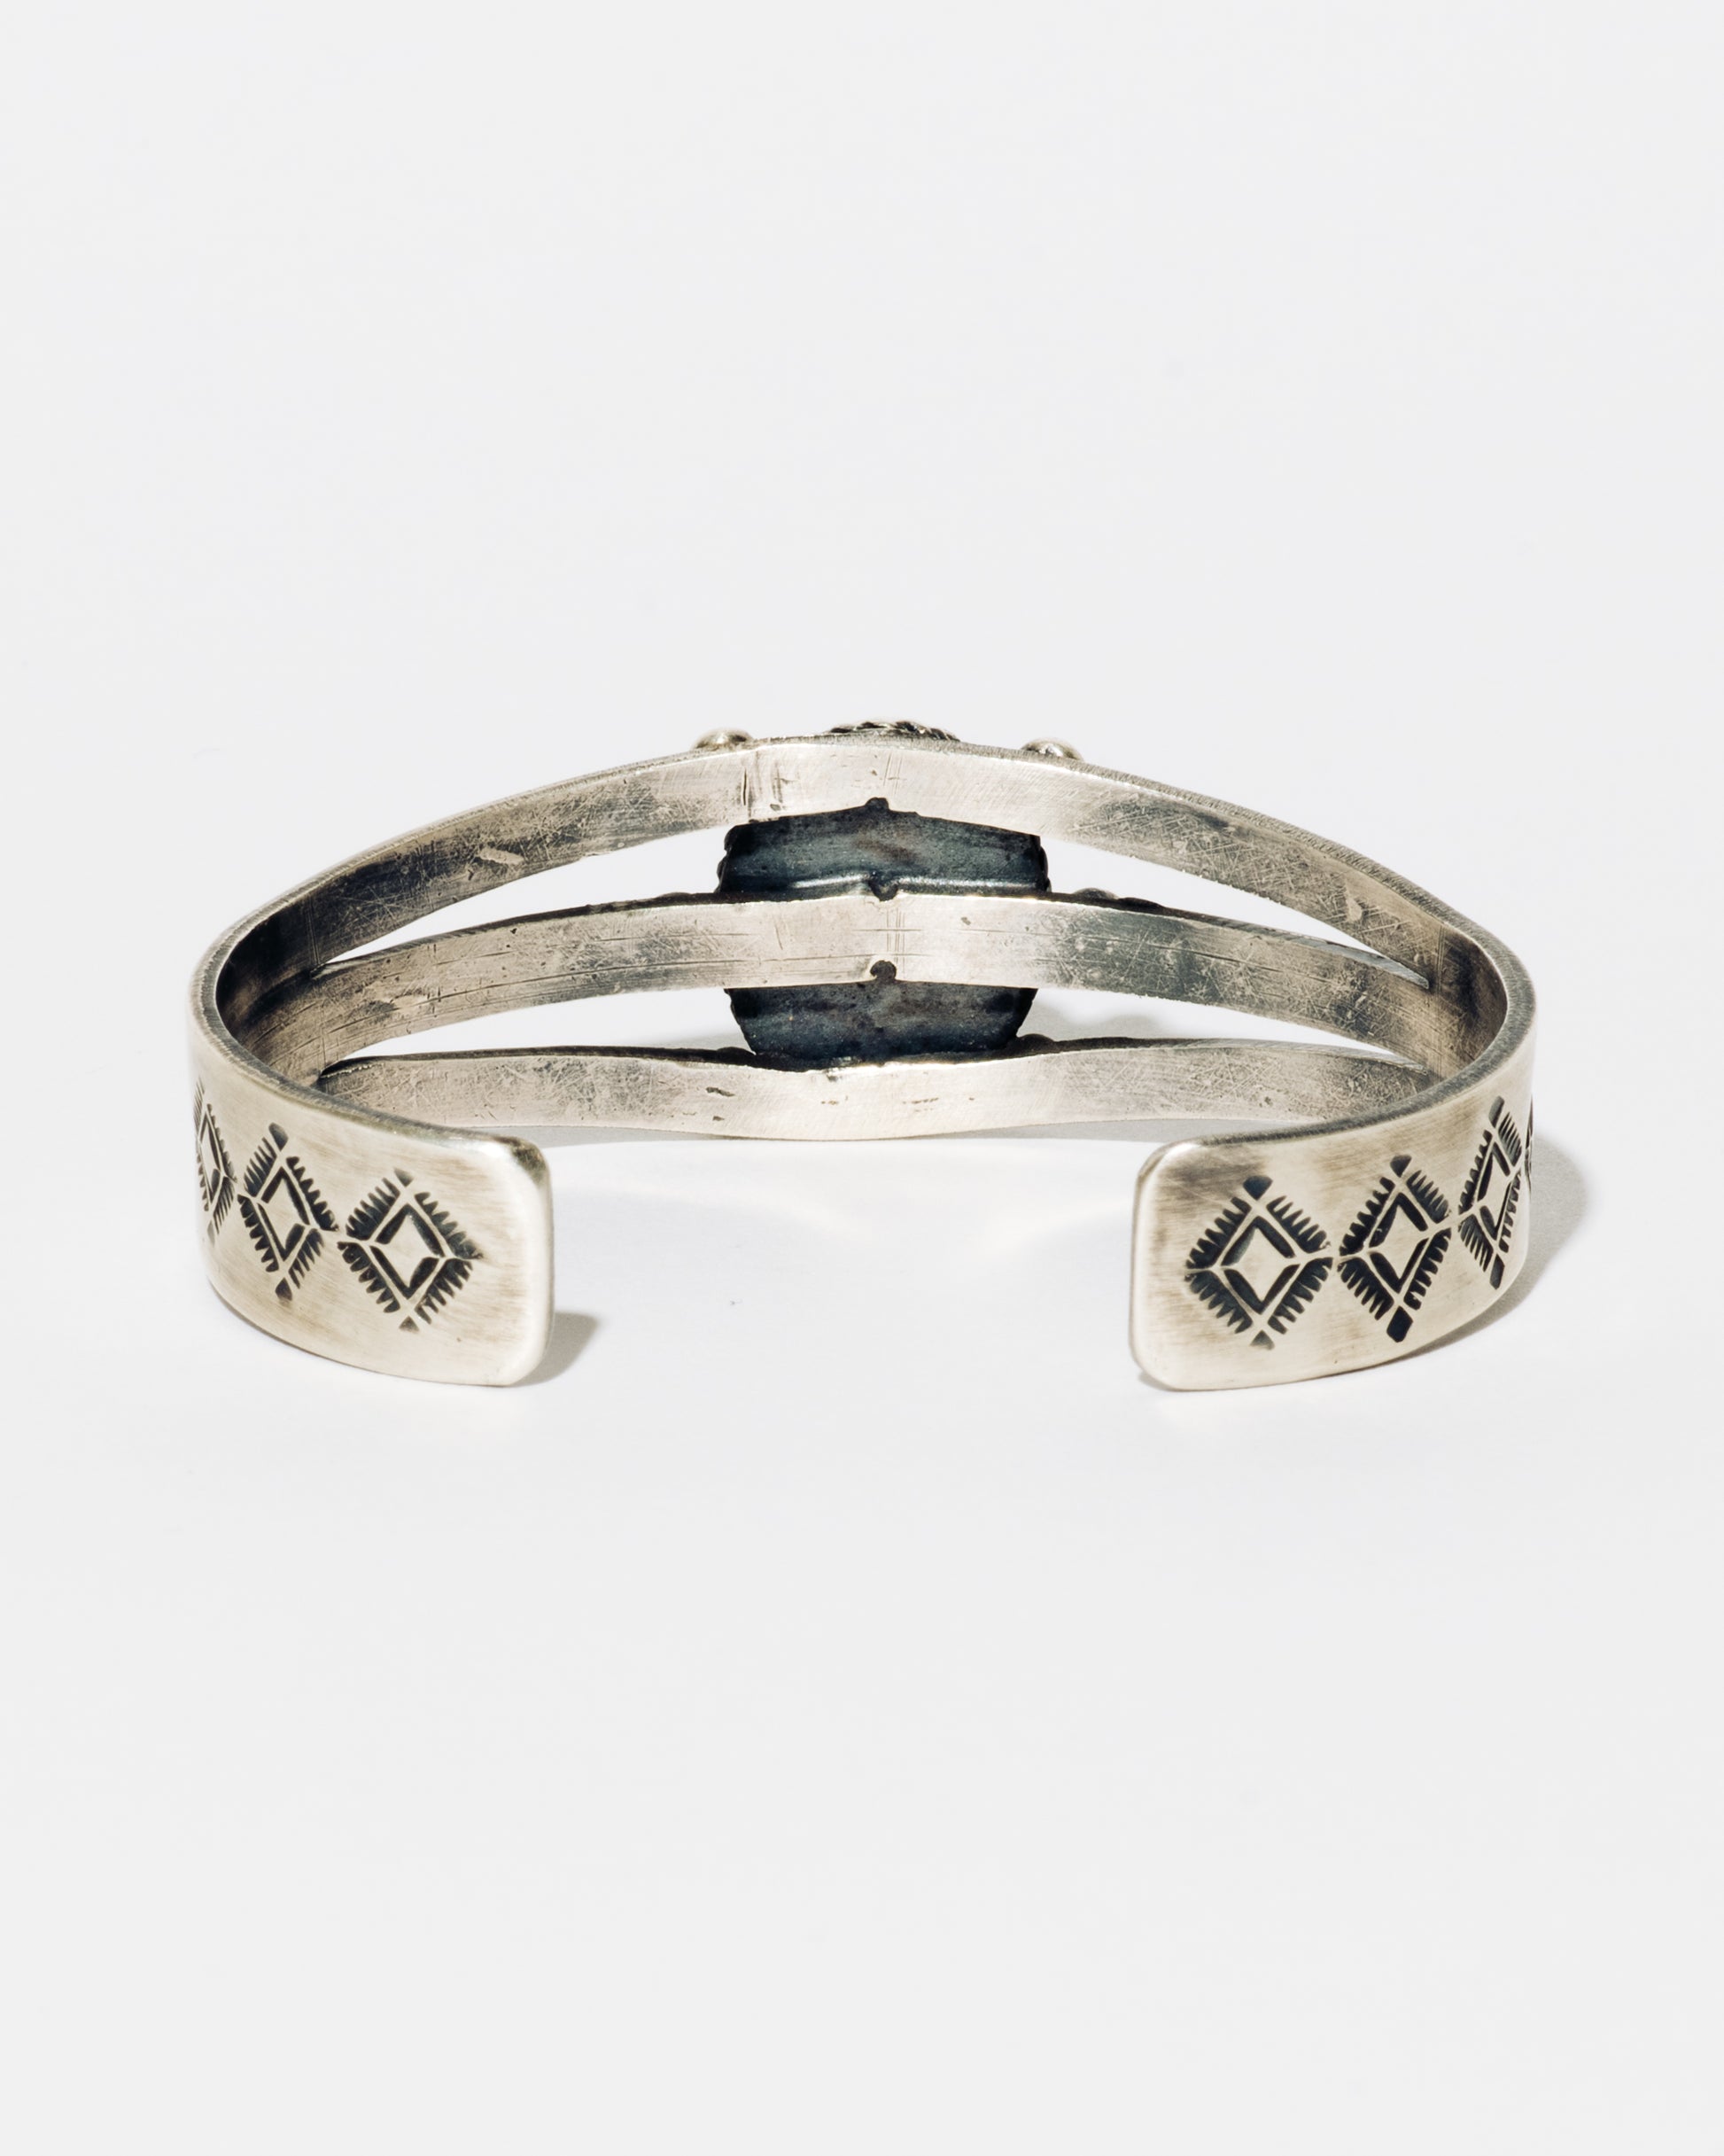 Hermes sterling silver nautical charm bracelet Genuine. Very Good Condition